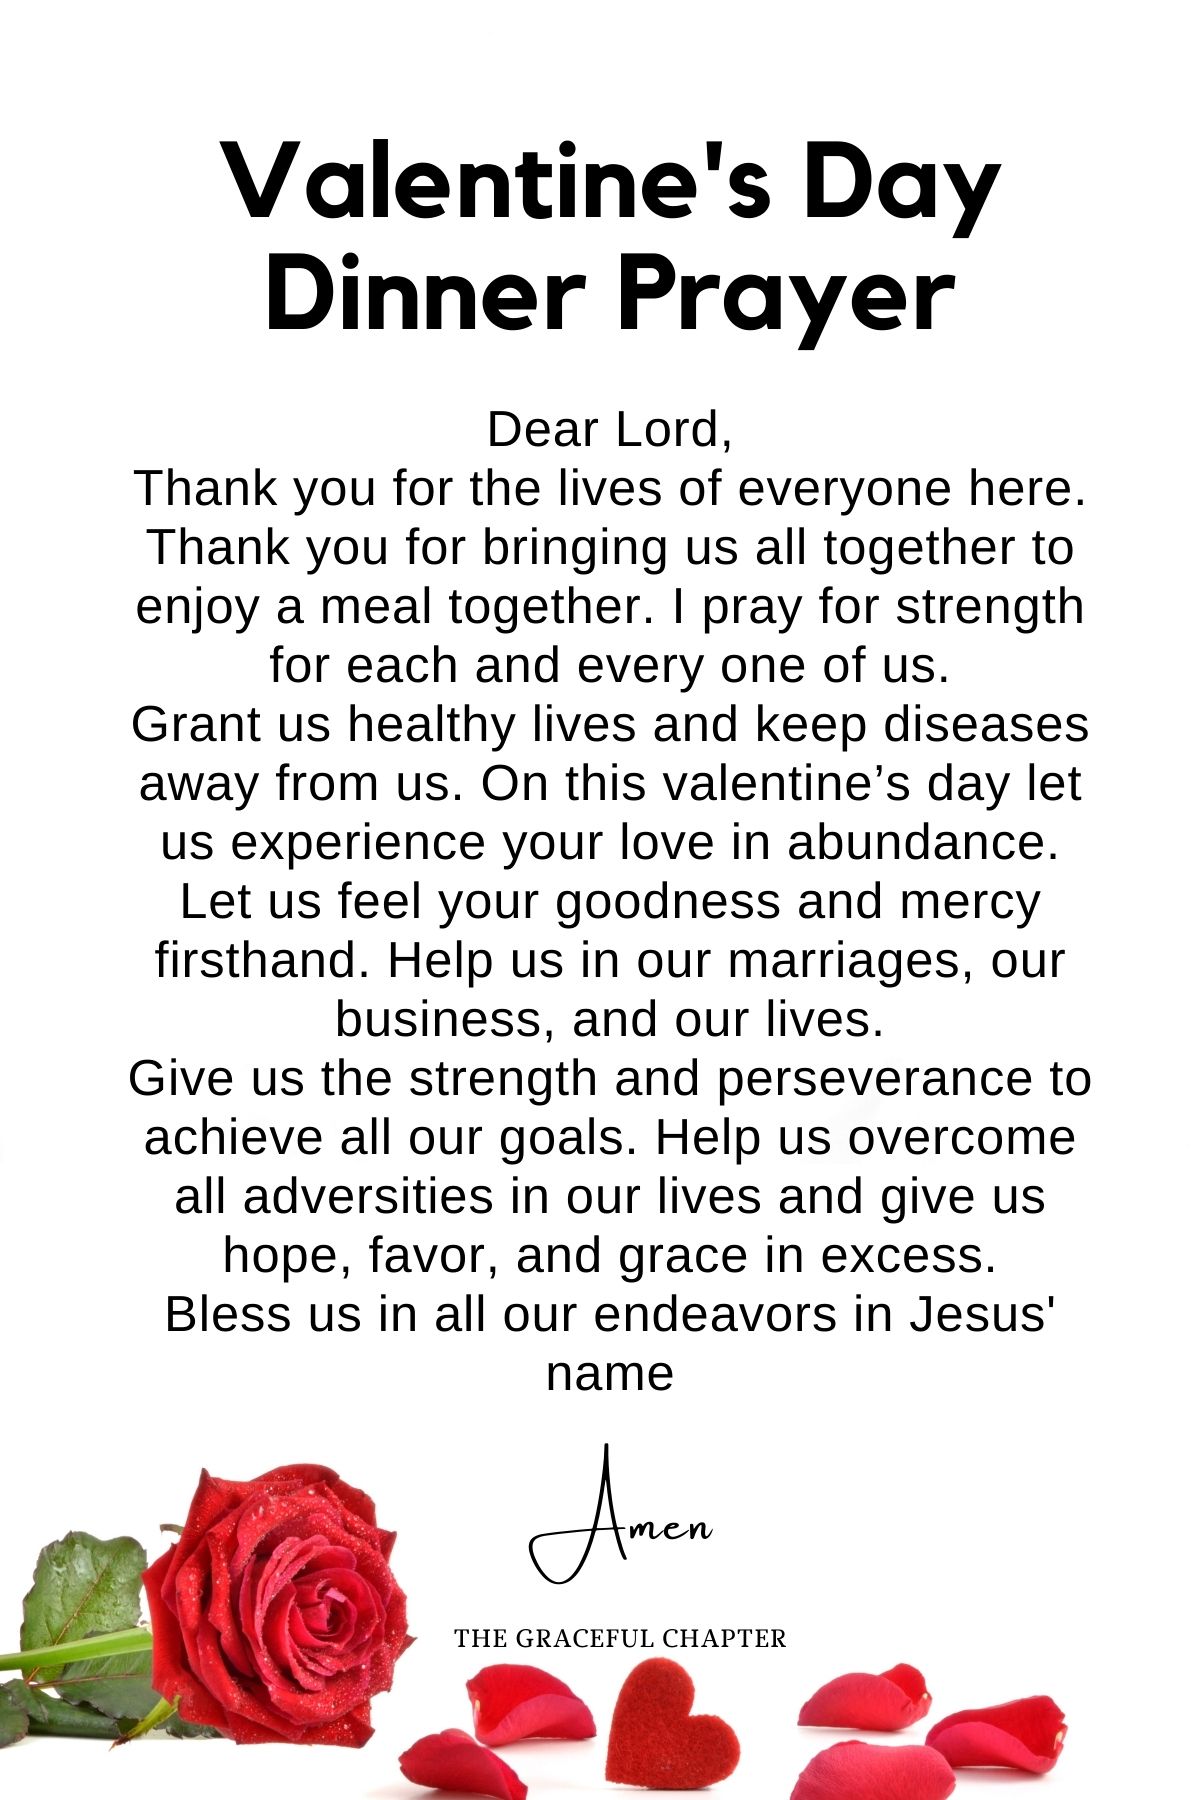 Valentine's day dinner prayer